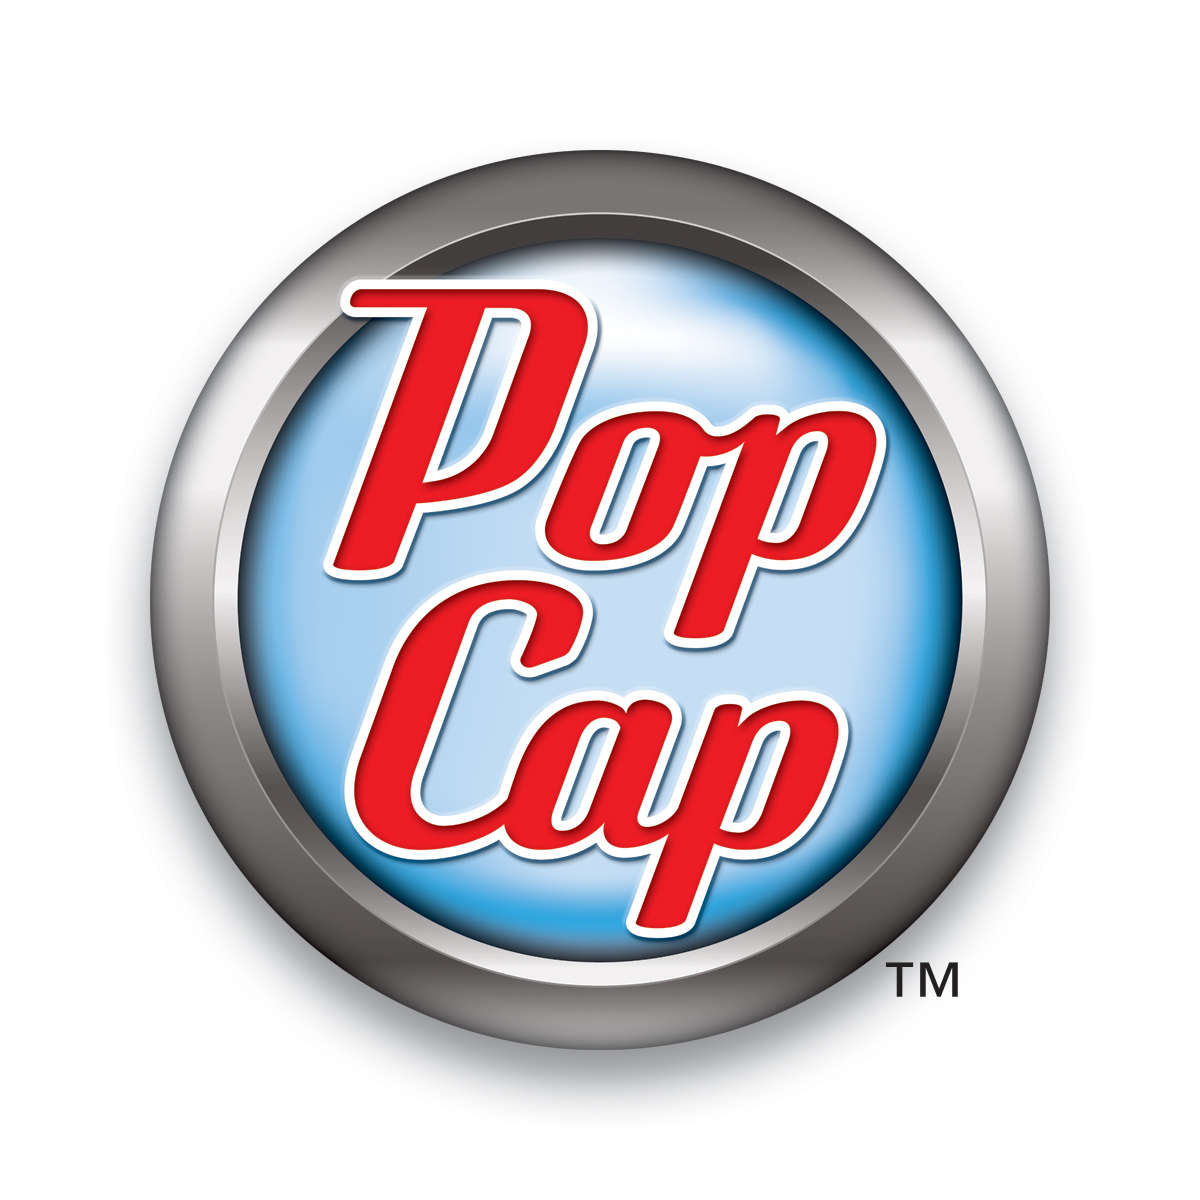 Bejeweled' Creator PopCap Games Raises $22.5 Million